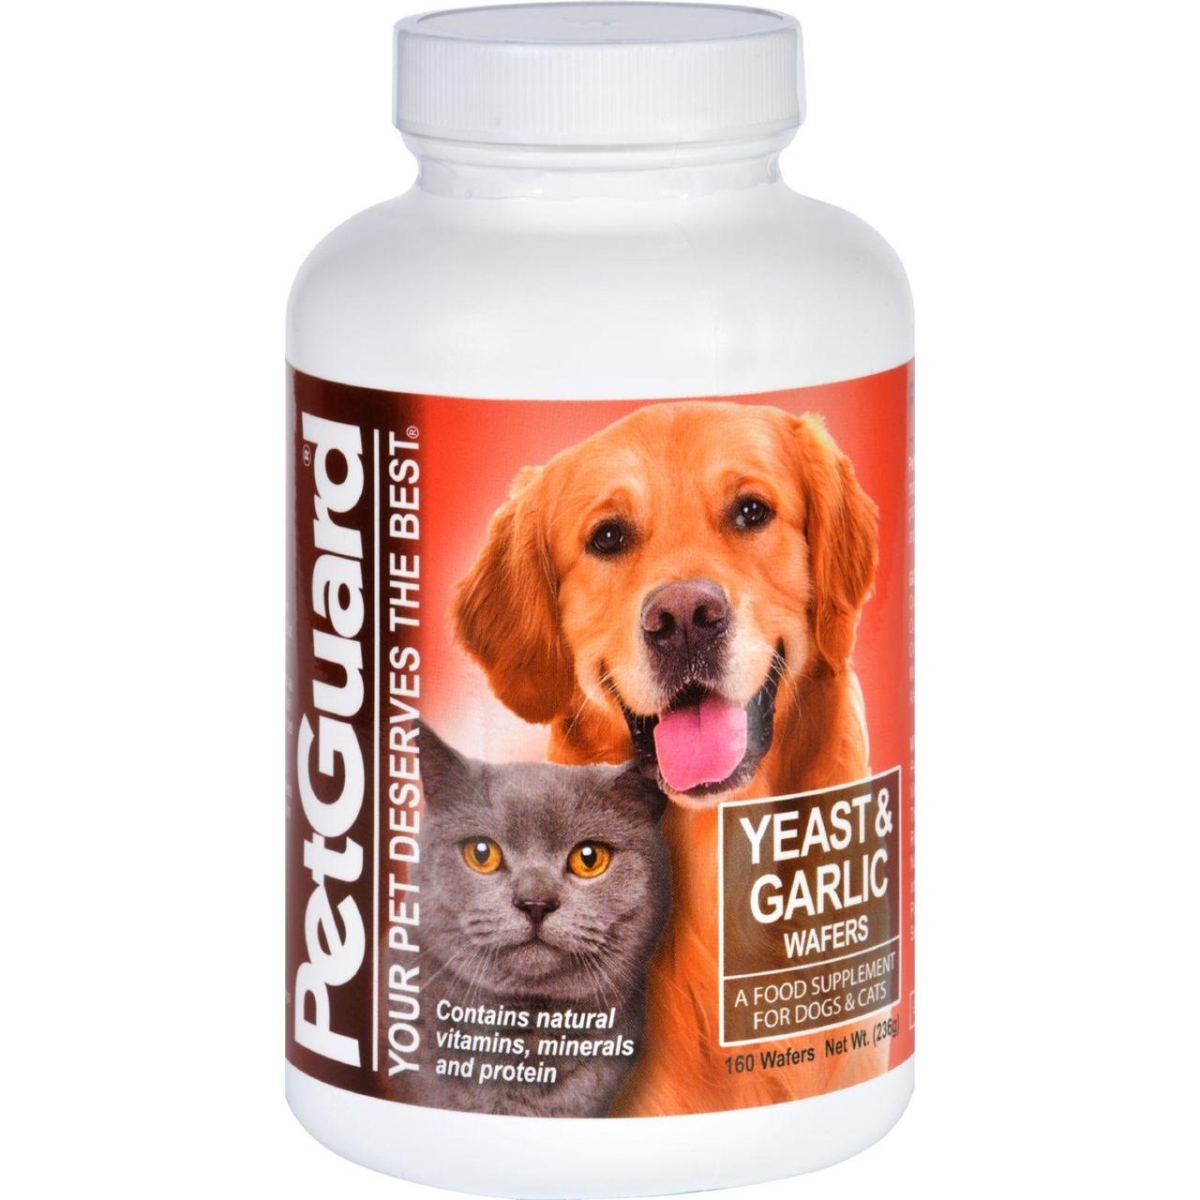 Petguard Hg0710202 Yeast & Garlic - 160 Wafers